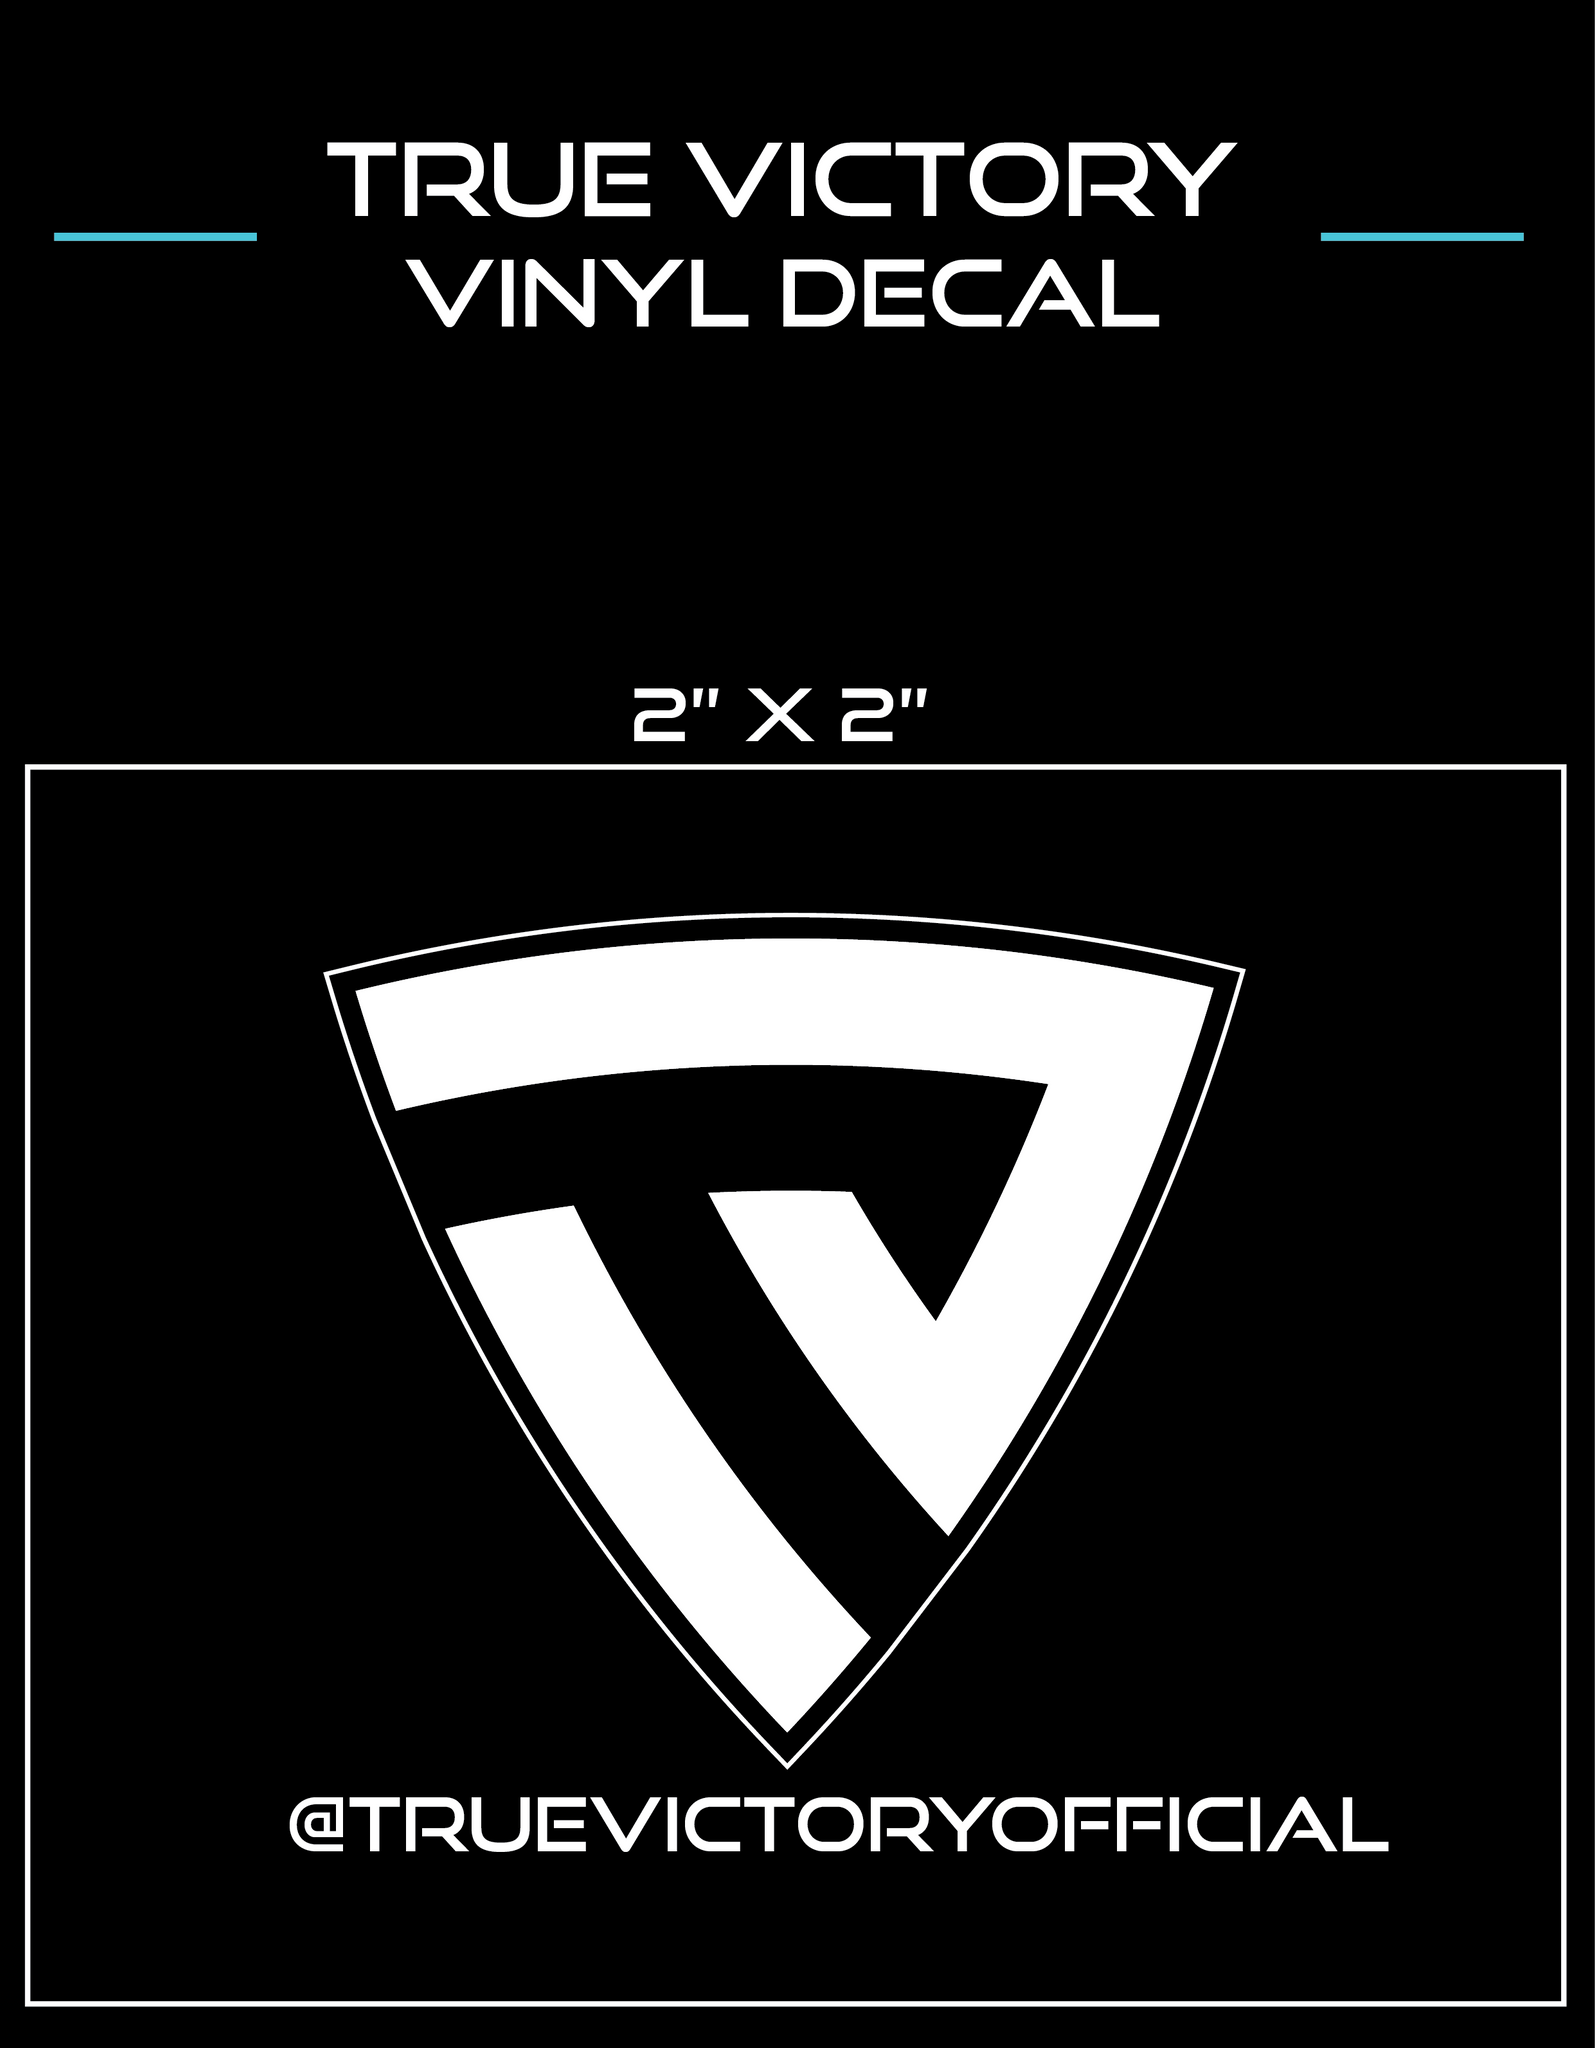 True Victory 2" x 2" Vinyl Decal